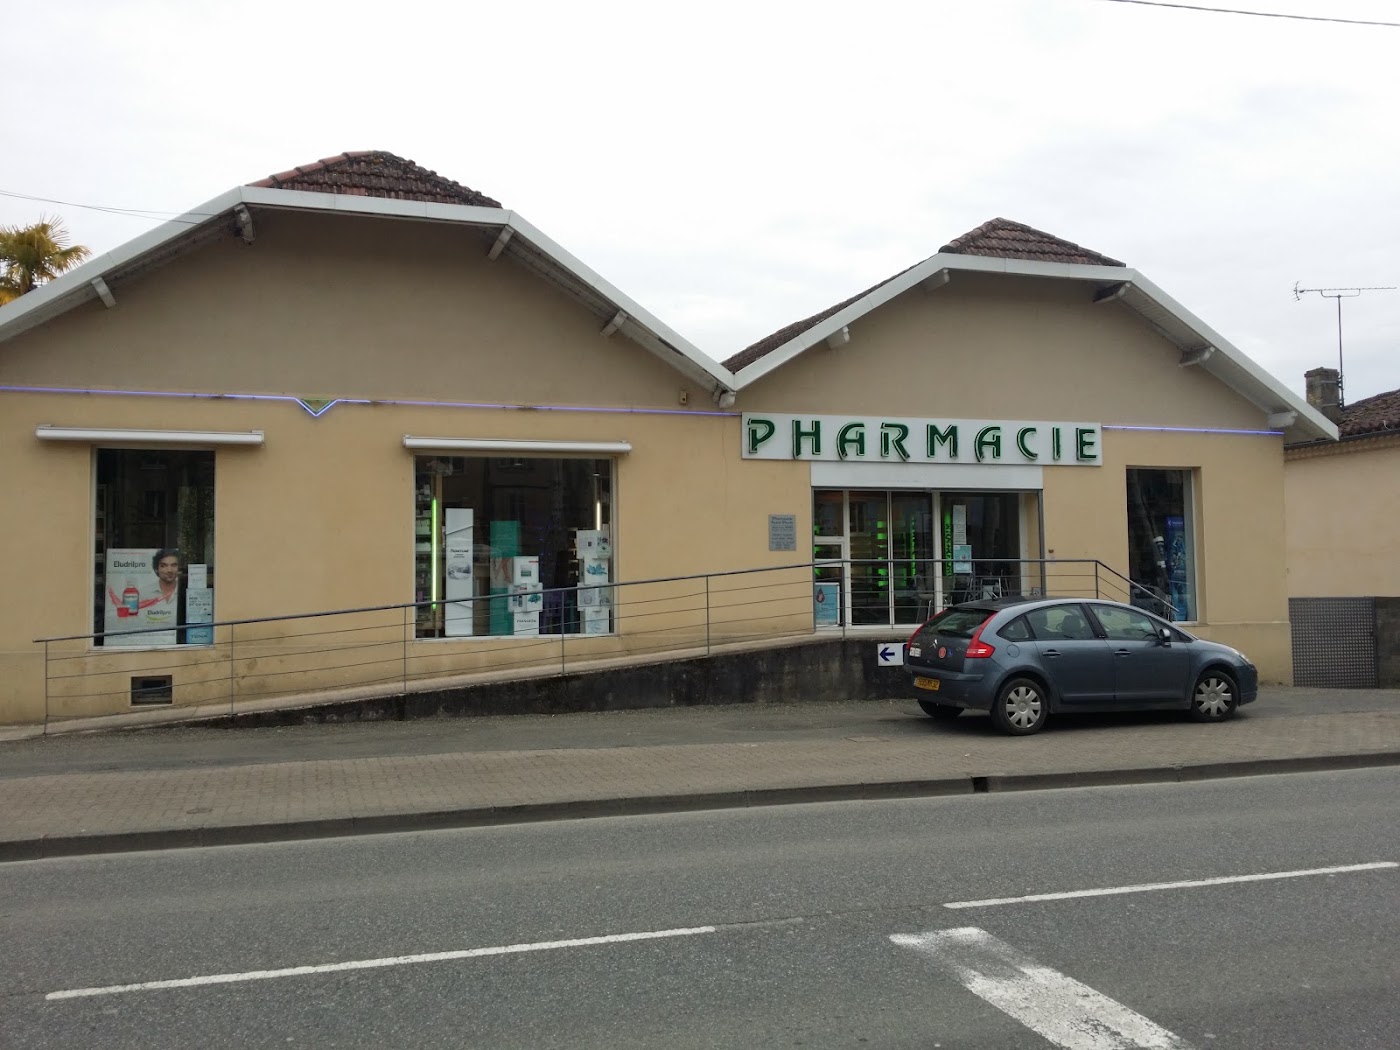 Pharmacie Saint Pierre